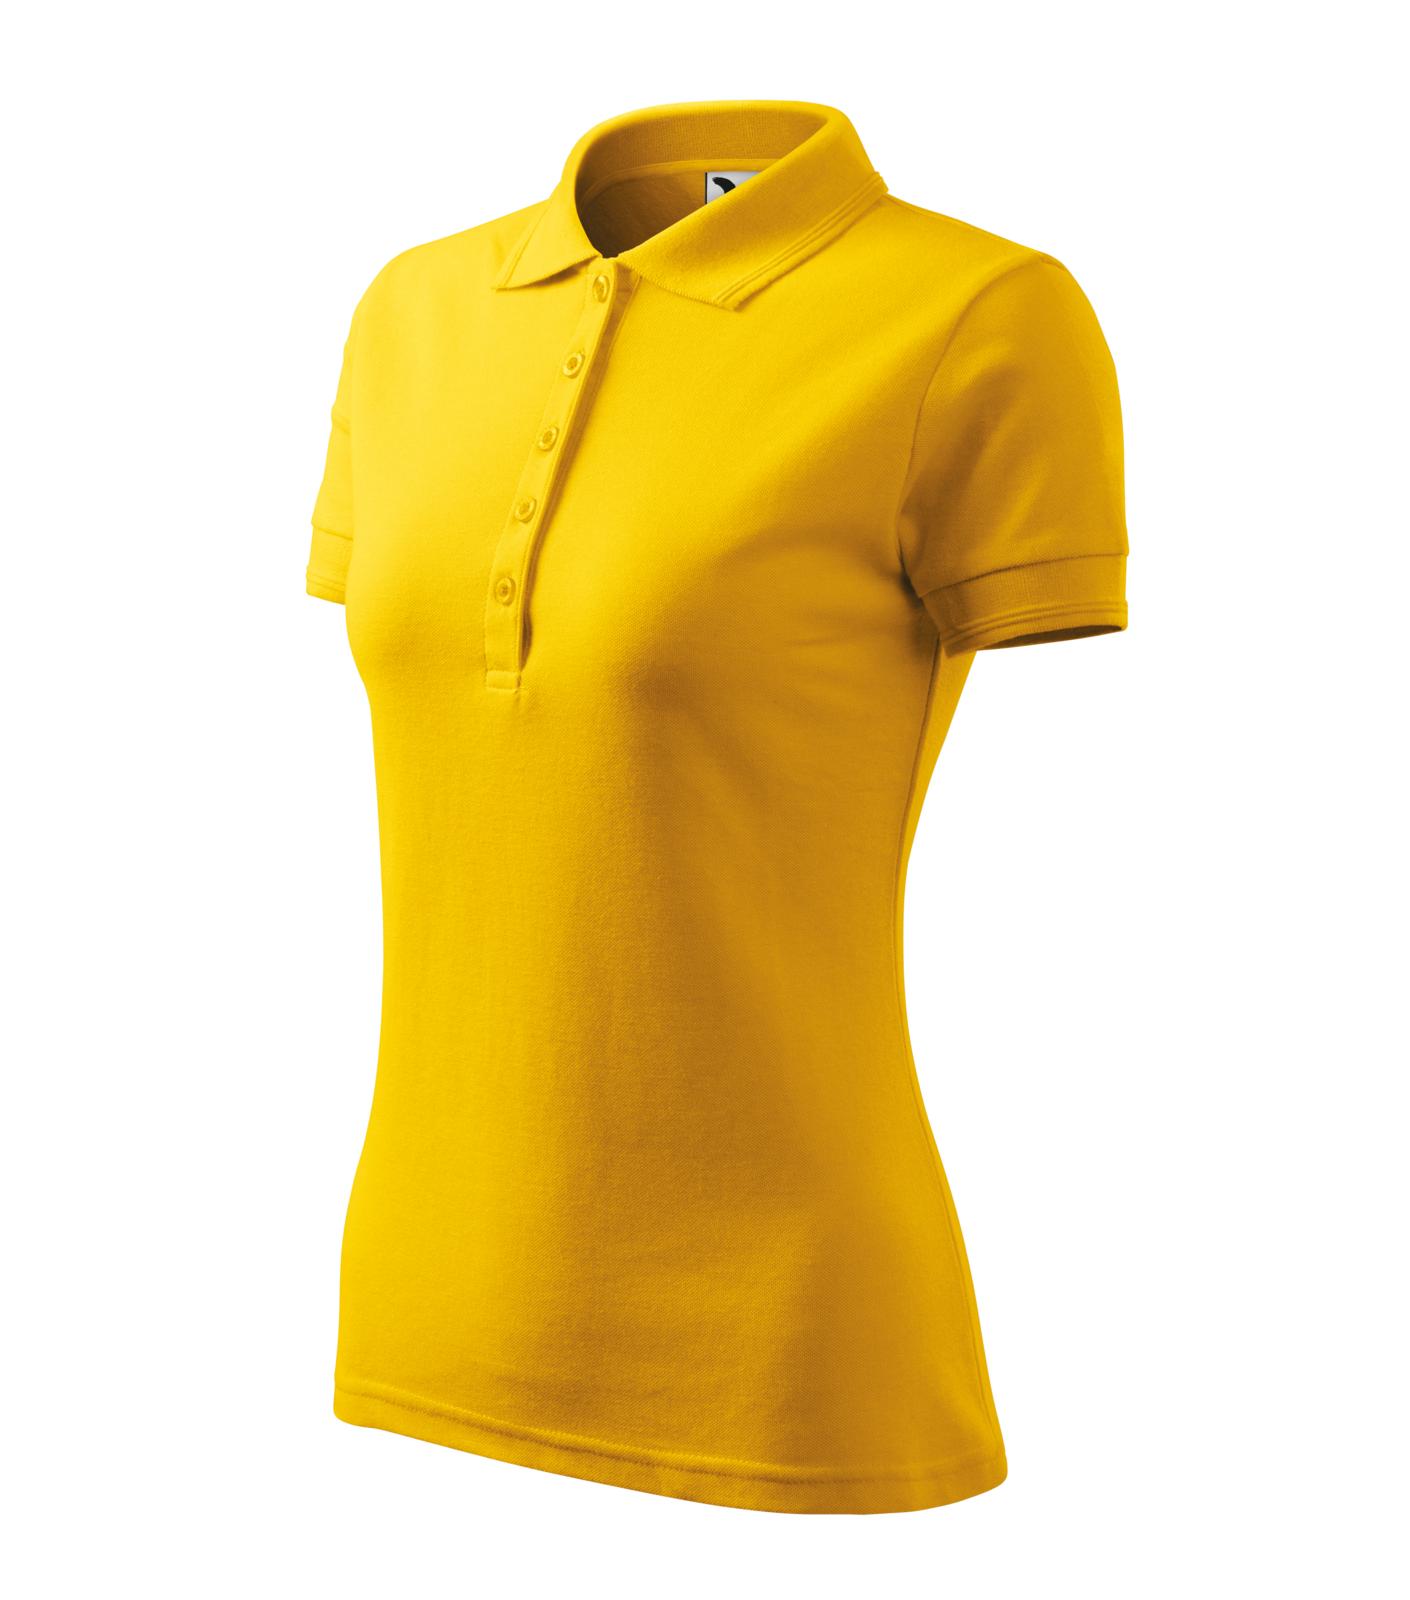 Pique Polo Polokošile dámská Barva: žlutá, Velikost: S